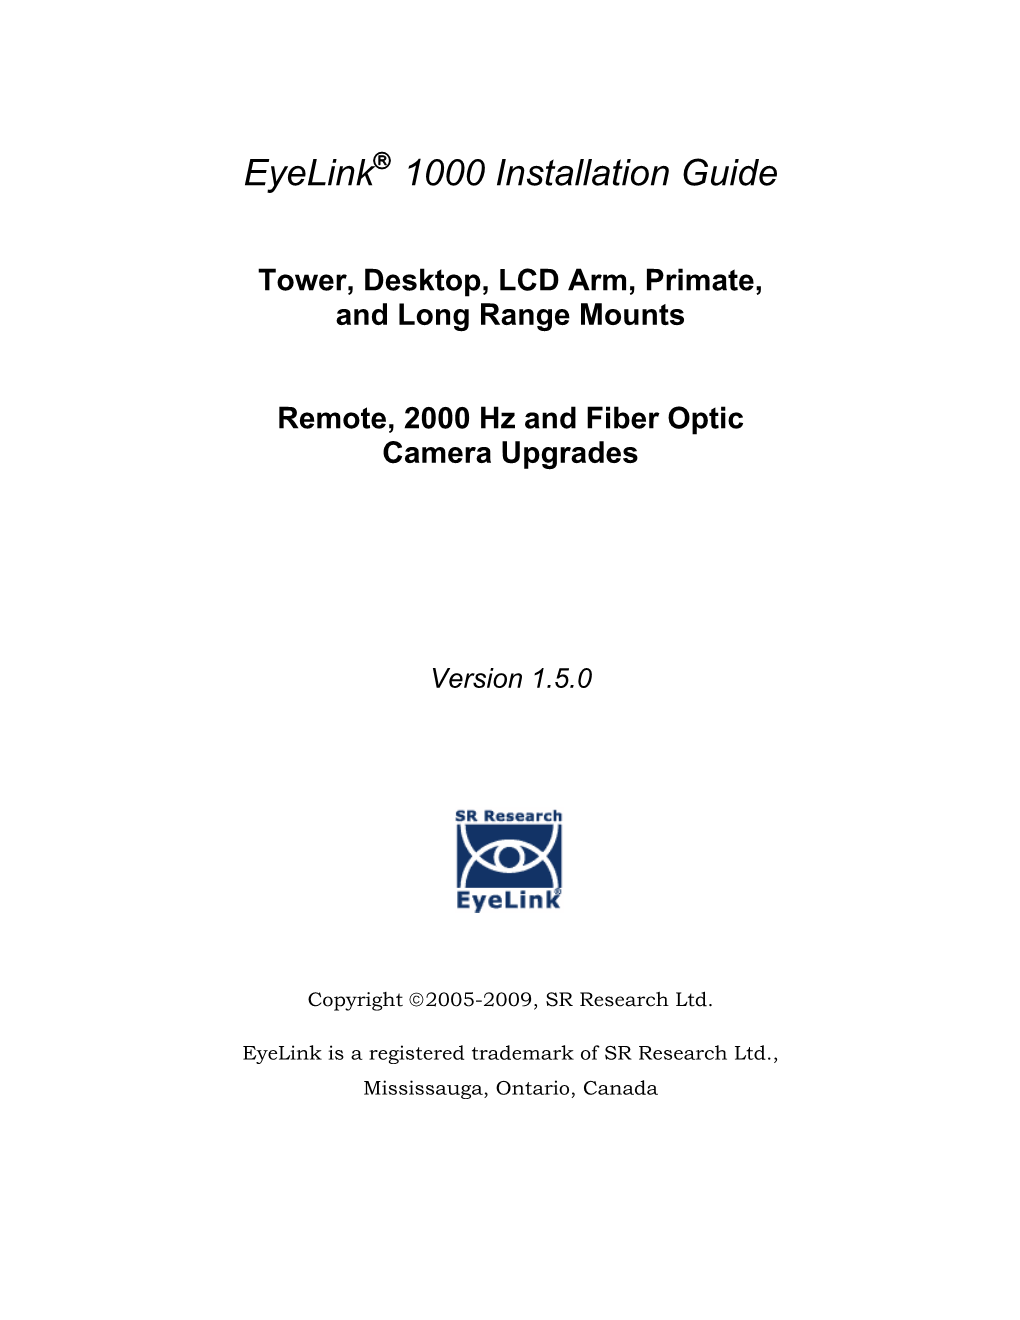 Eyelink 1000 Installation Guide